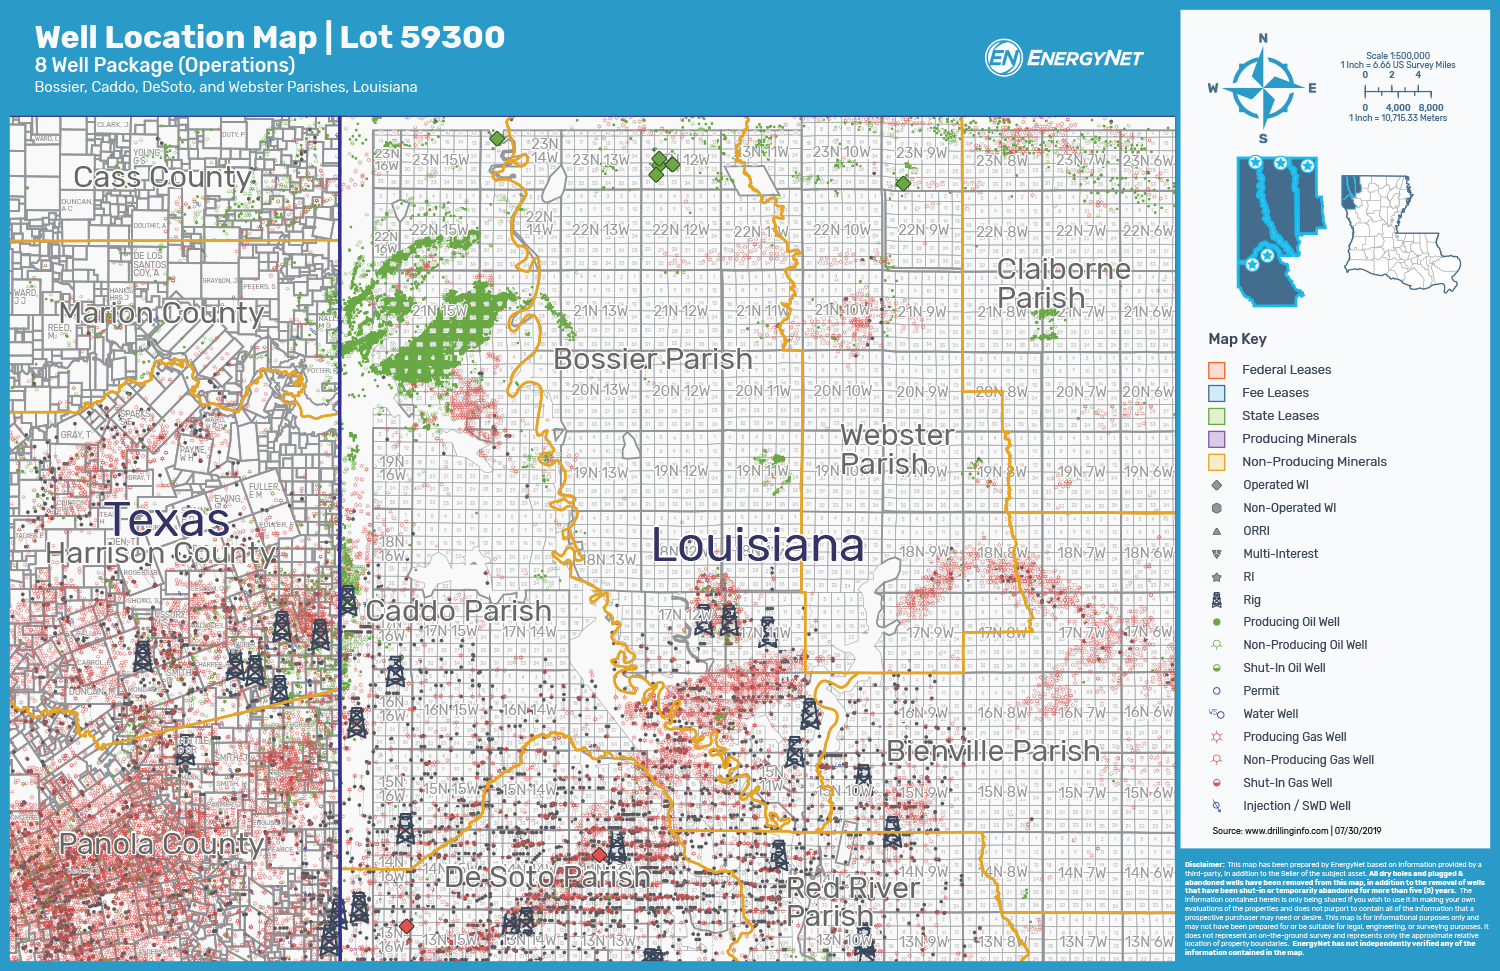 Cheetah Gas Co. Ltd. Northern Louisiana Operated Asset Map (Source: EnergyNet)